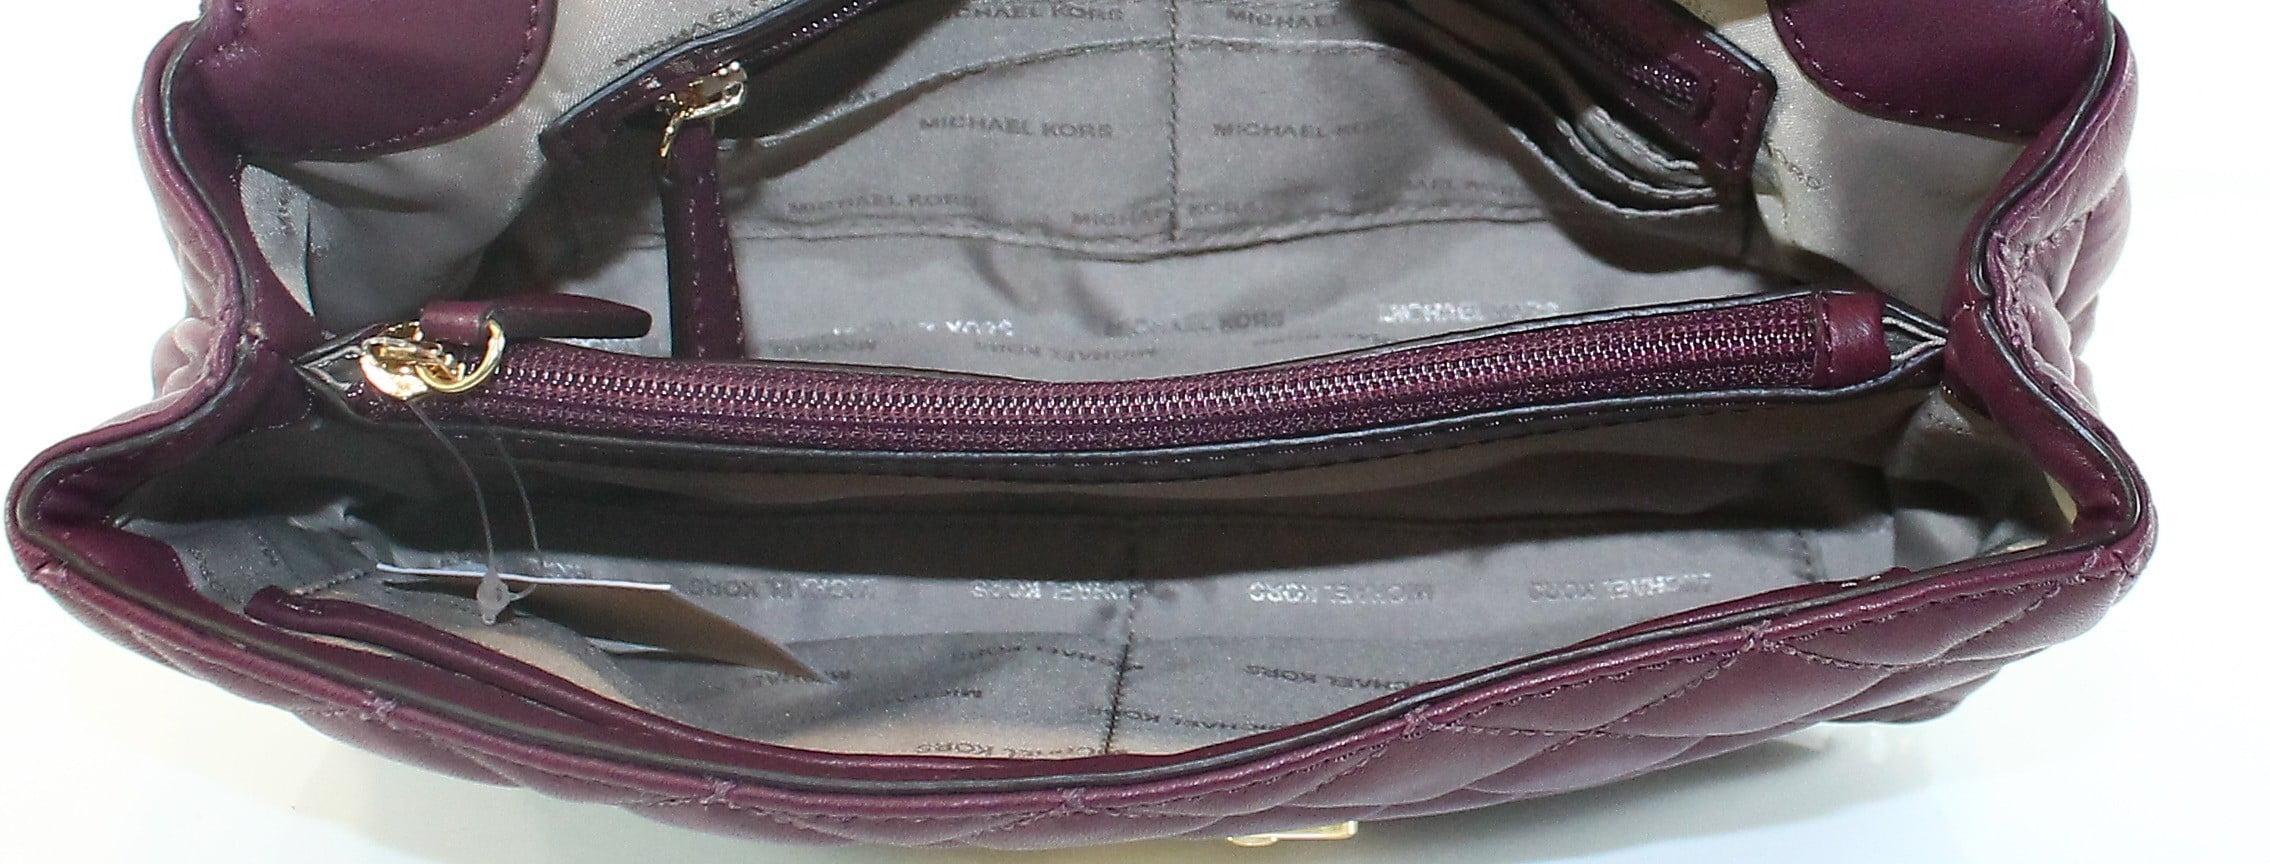 Shoulder bags Michael Kors - Sloan quilted leather crossbody bag -  30F6ASLL3L001